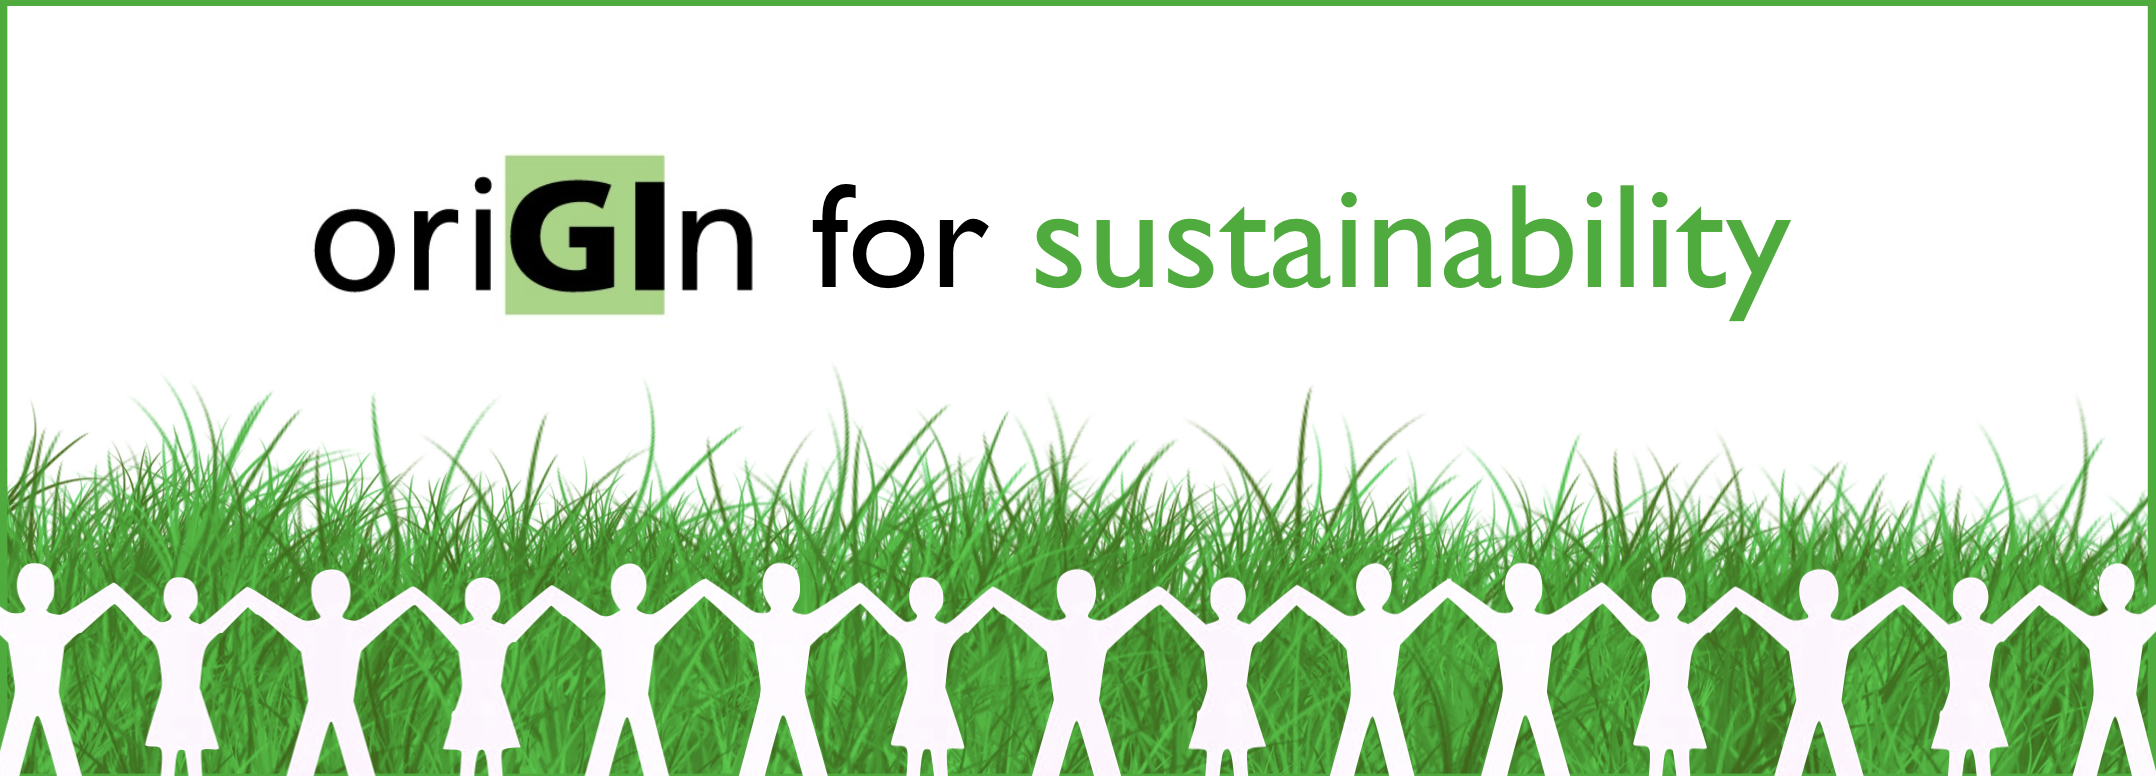 Final sustainability logo